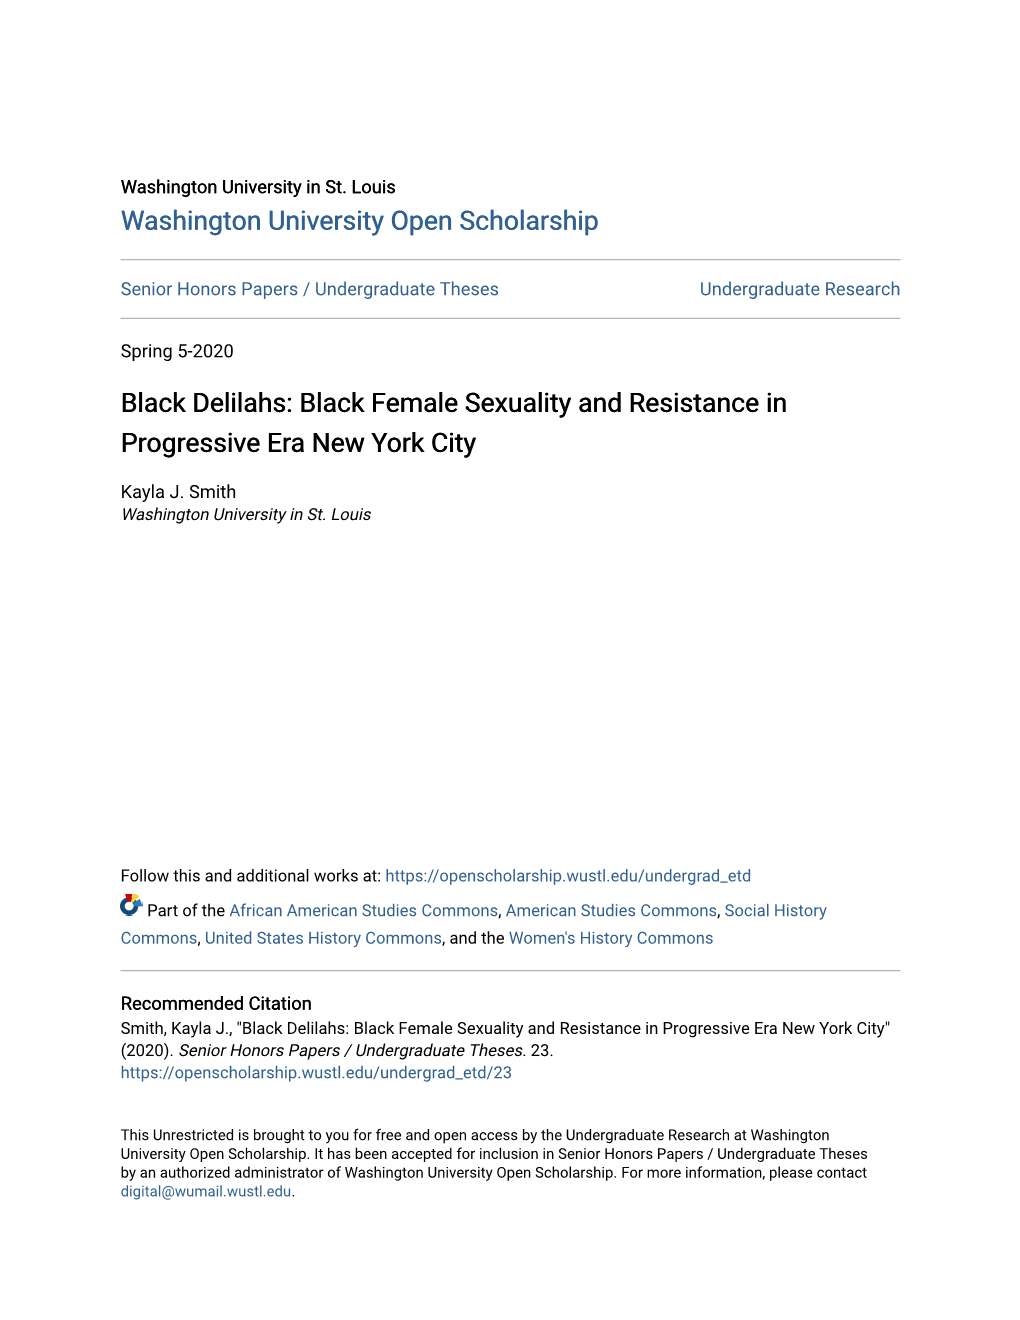 Black Female Sexuality and Resistance in Progressive Era New York City